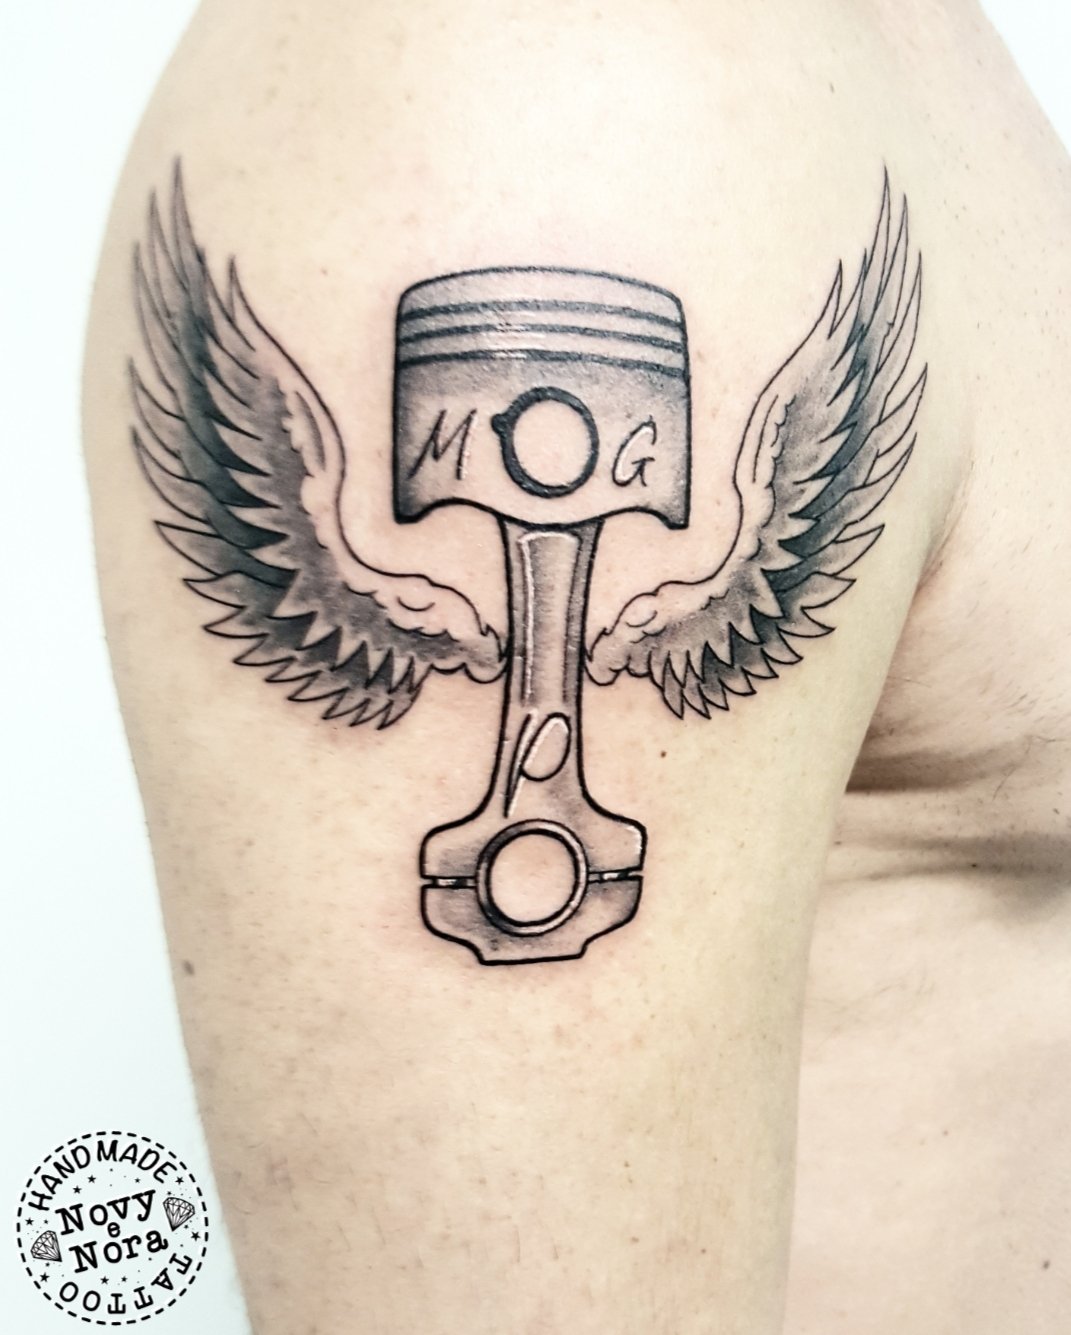 Knuckle, HD One, piston, spark plug tattoo | Sean Vera | Flickr